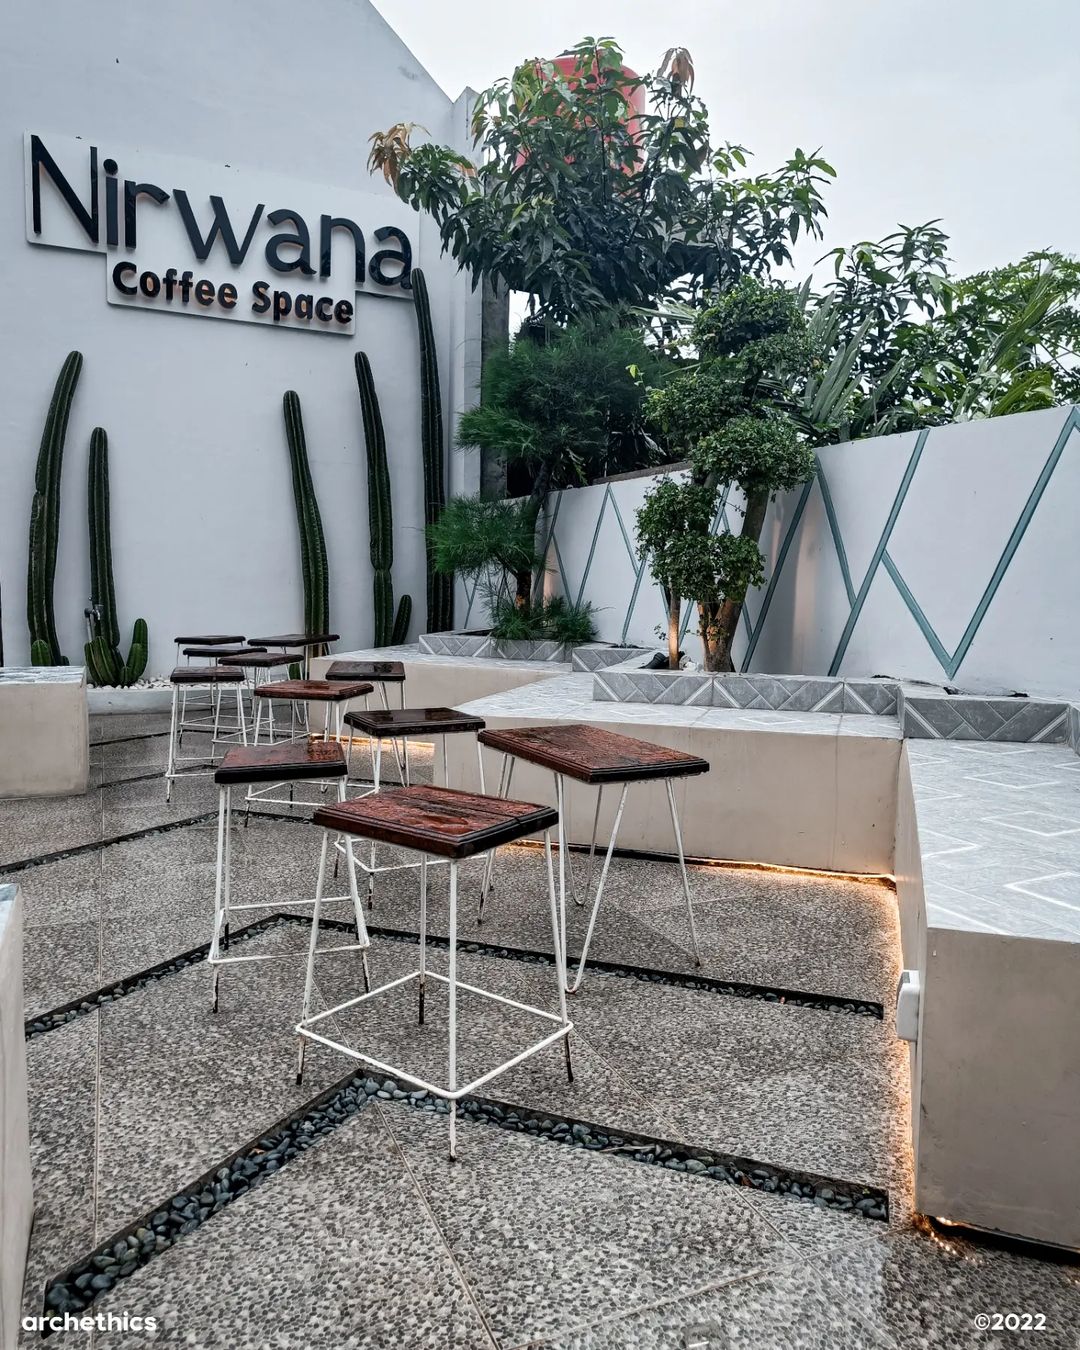 Nirwana Coffee Space Bojonggede Bogor